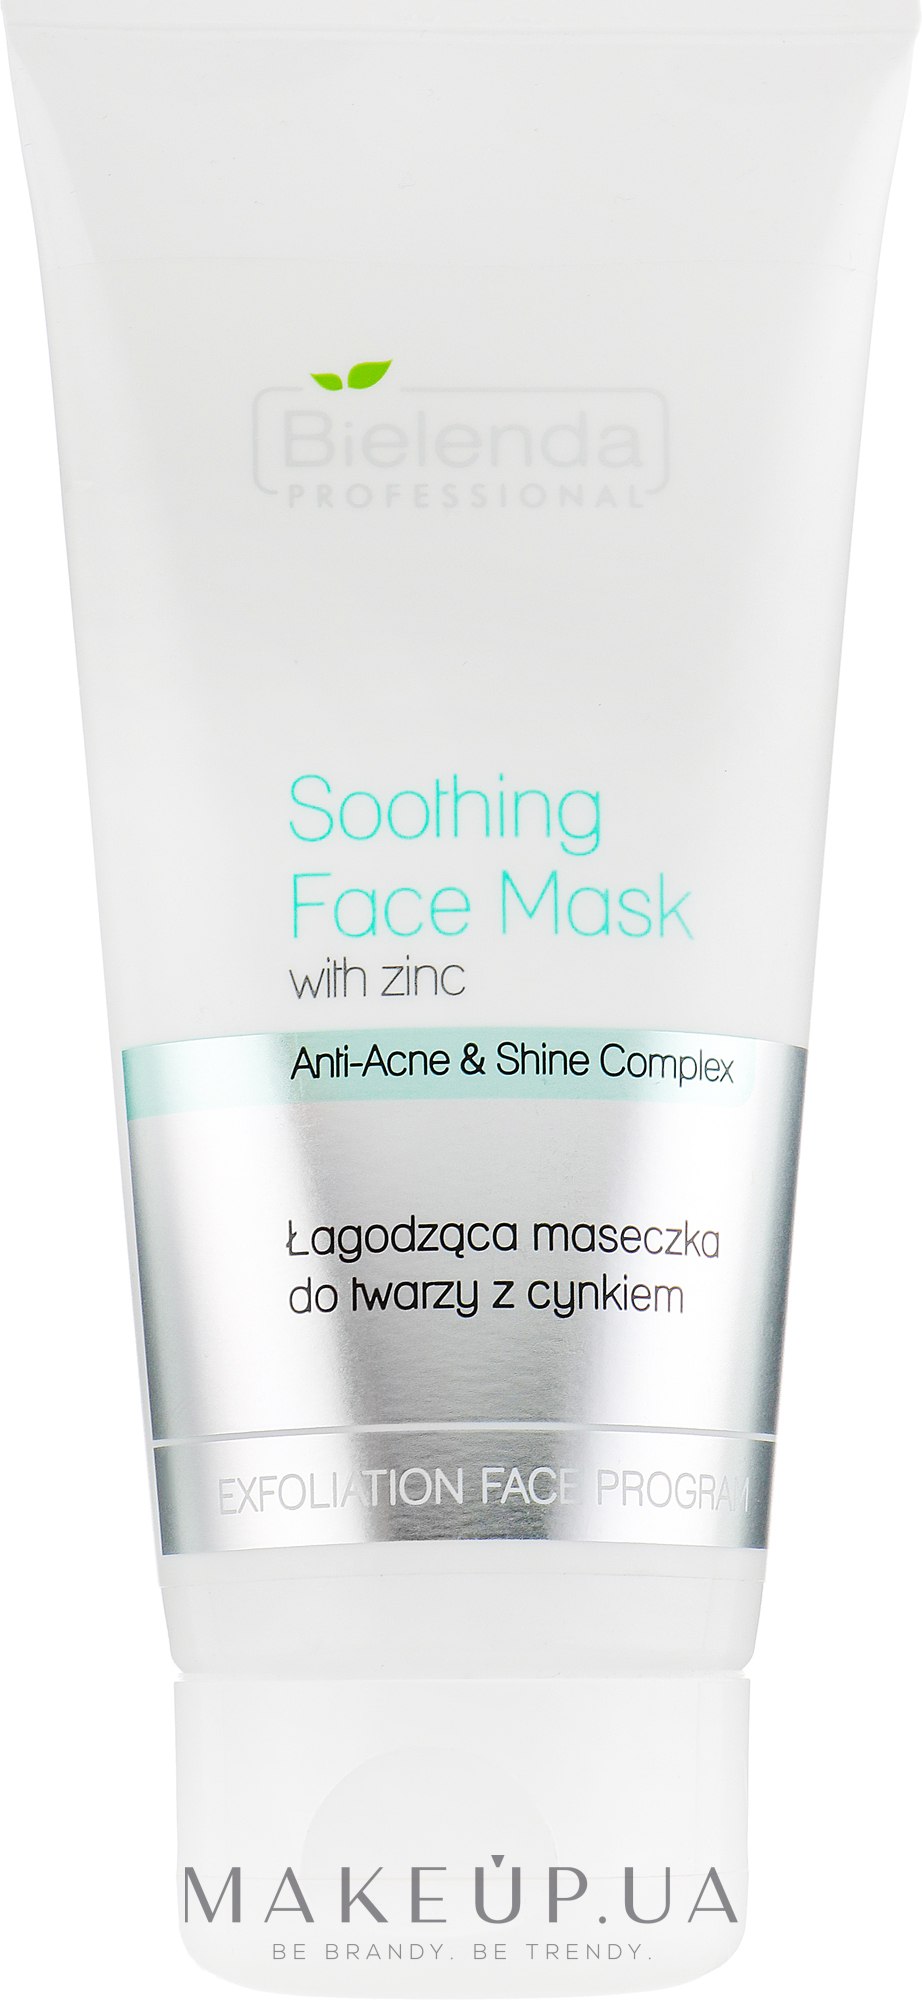 Заспокійлива маска з цинком - Bielenda Professional Exfoliation Face Program Soothing Mask with Zinc — фото 150g